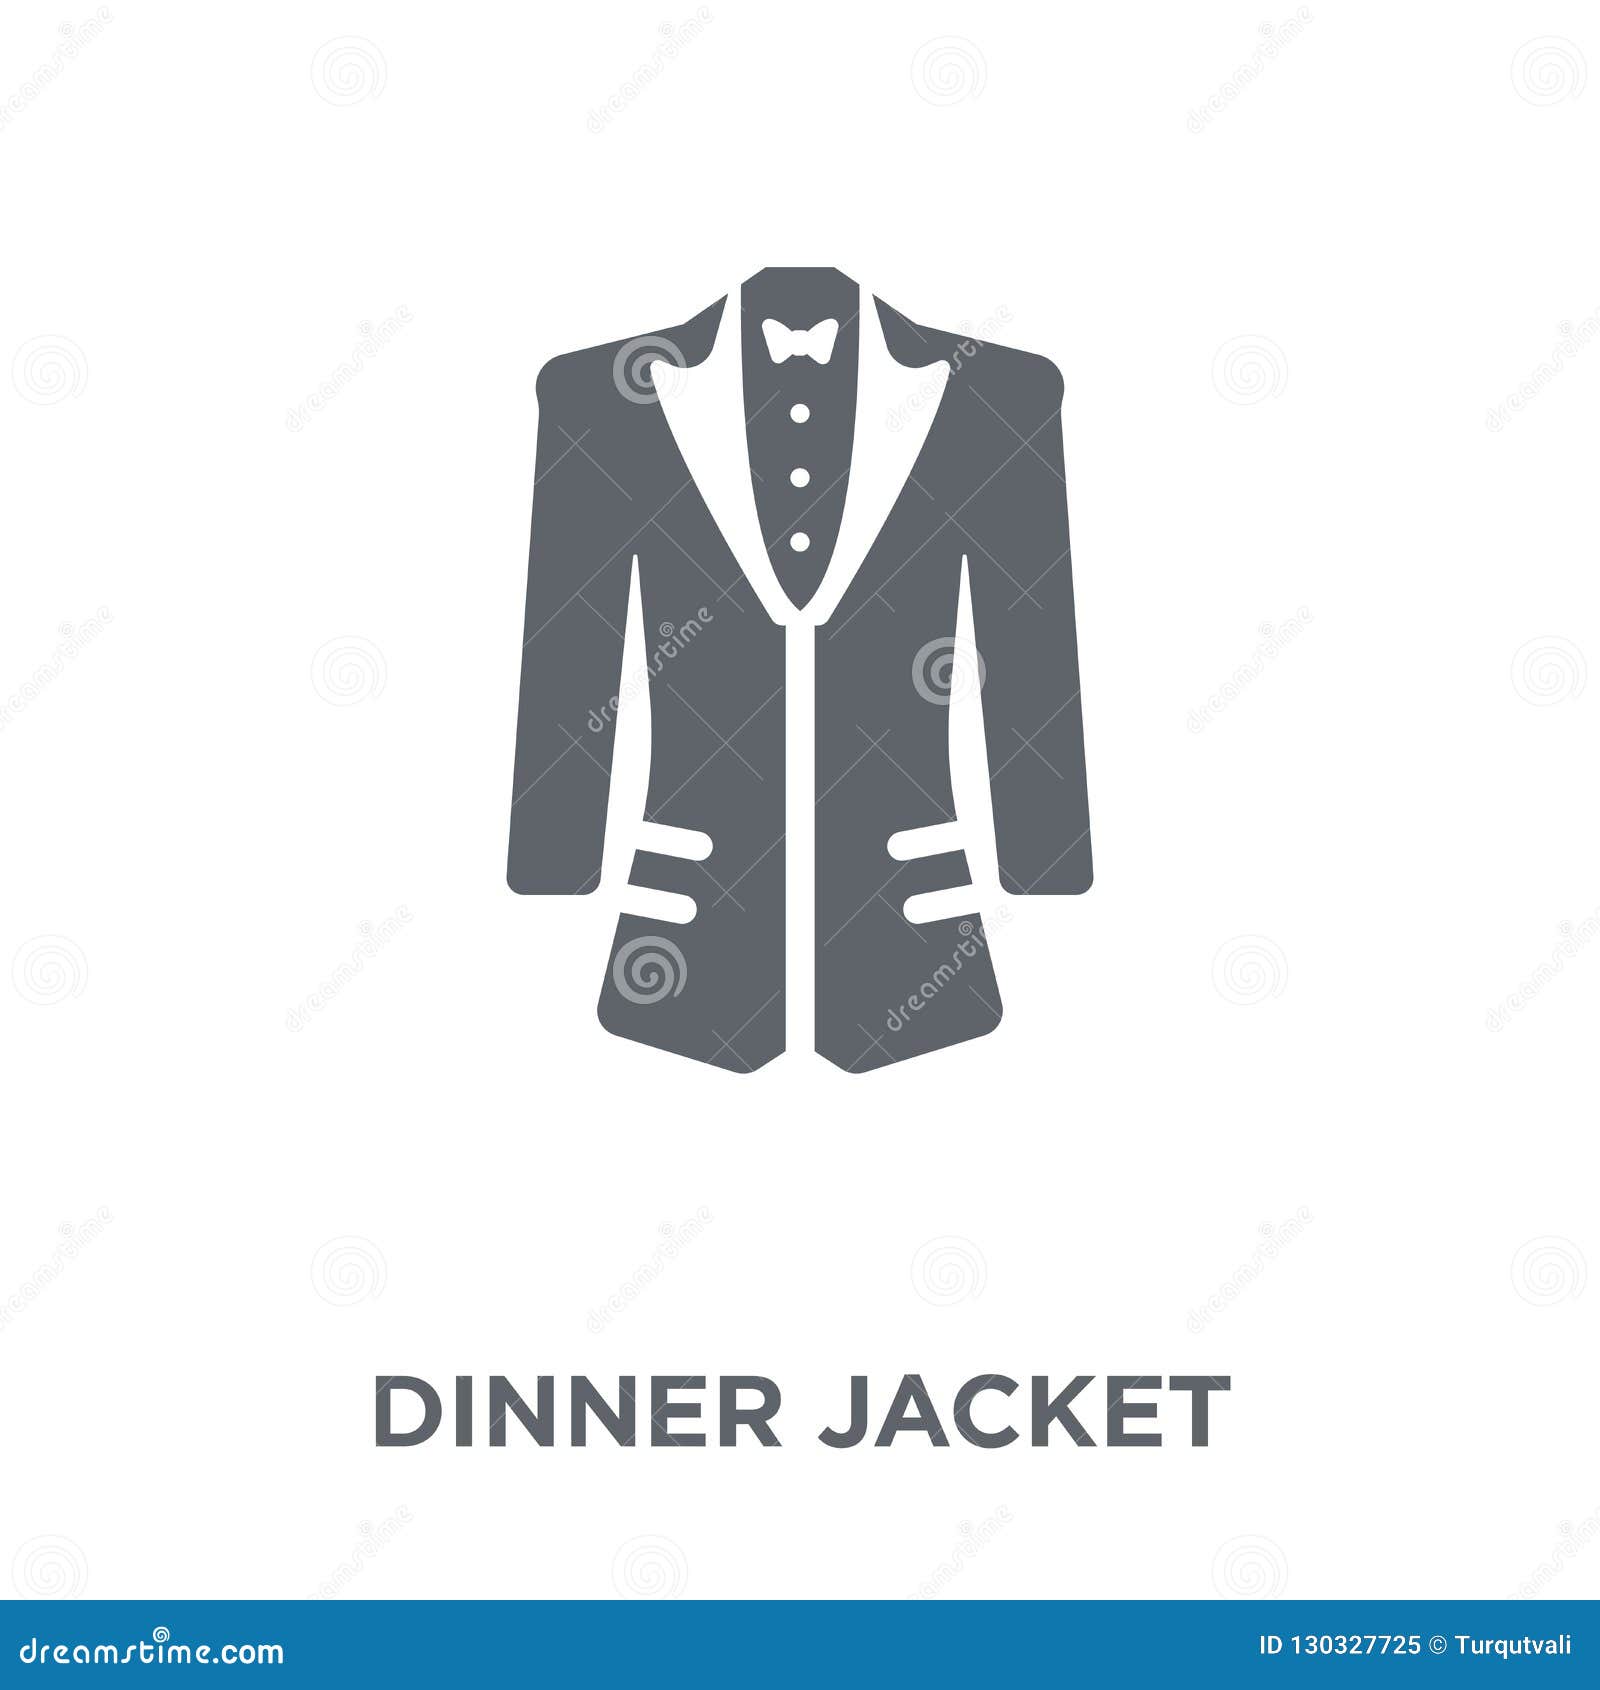 Dinner Jacket Tuxedo Suit Technical Fashion Illustration With Long ...